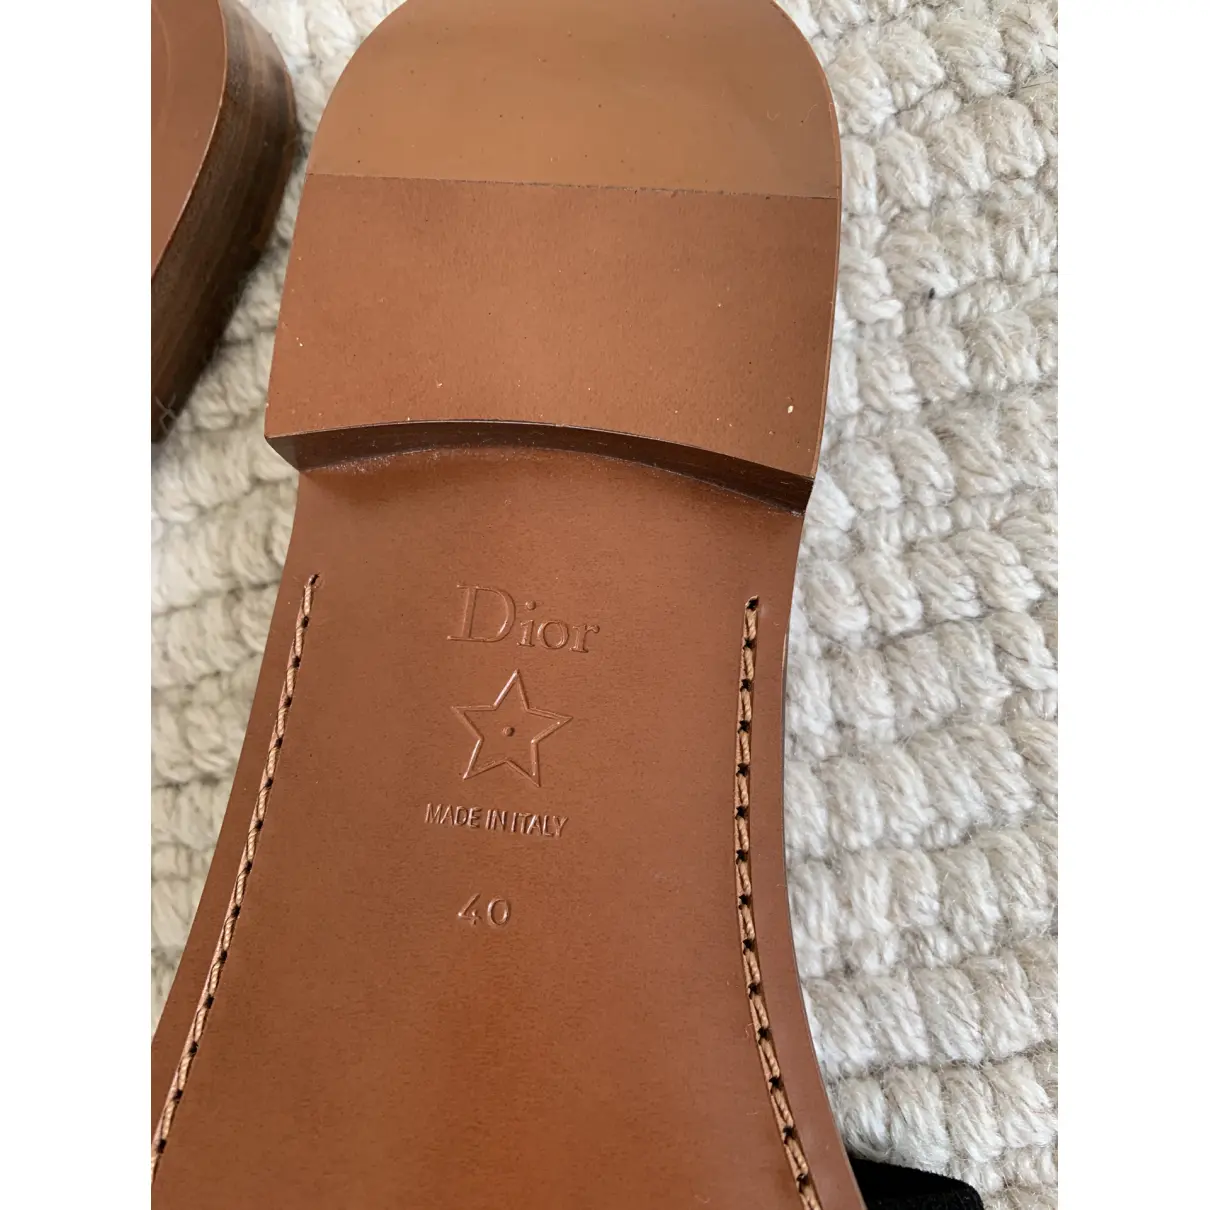 Buy Dior Leather sandals online